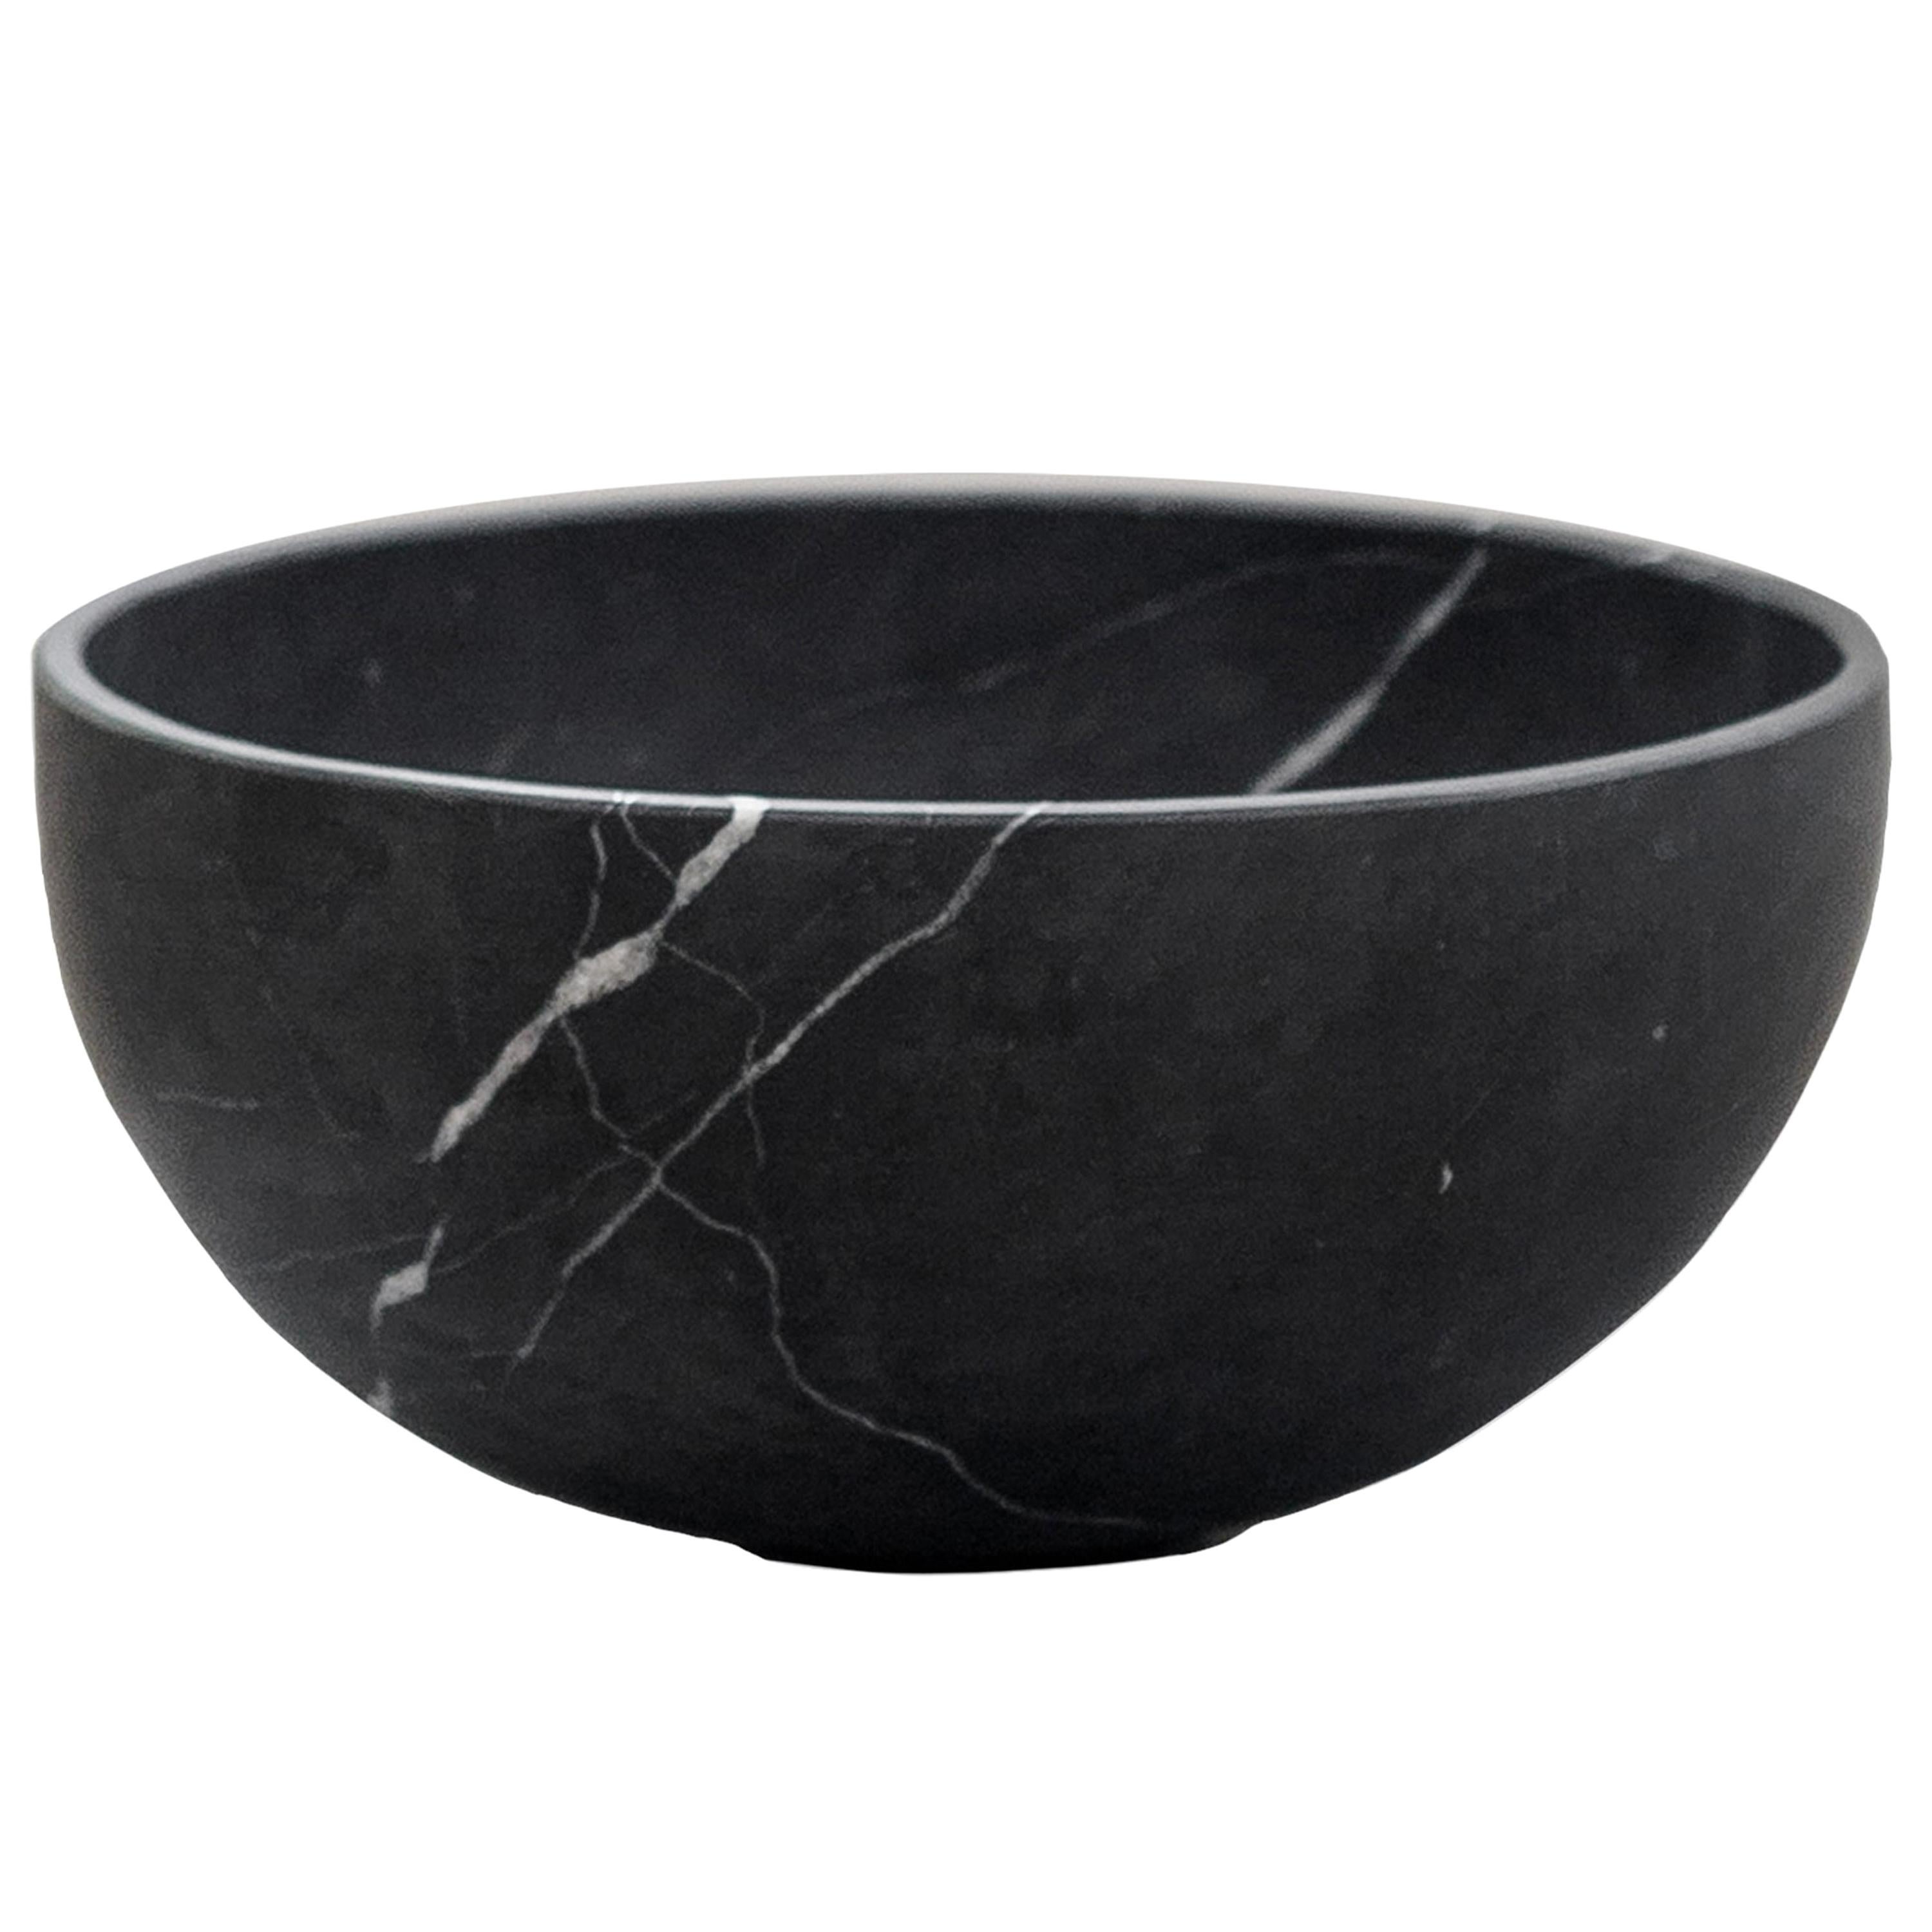 Grand bol en marbre noir sculpté